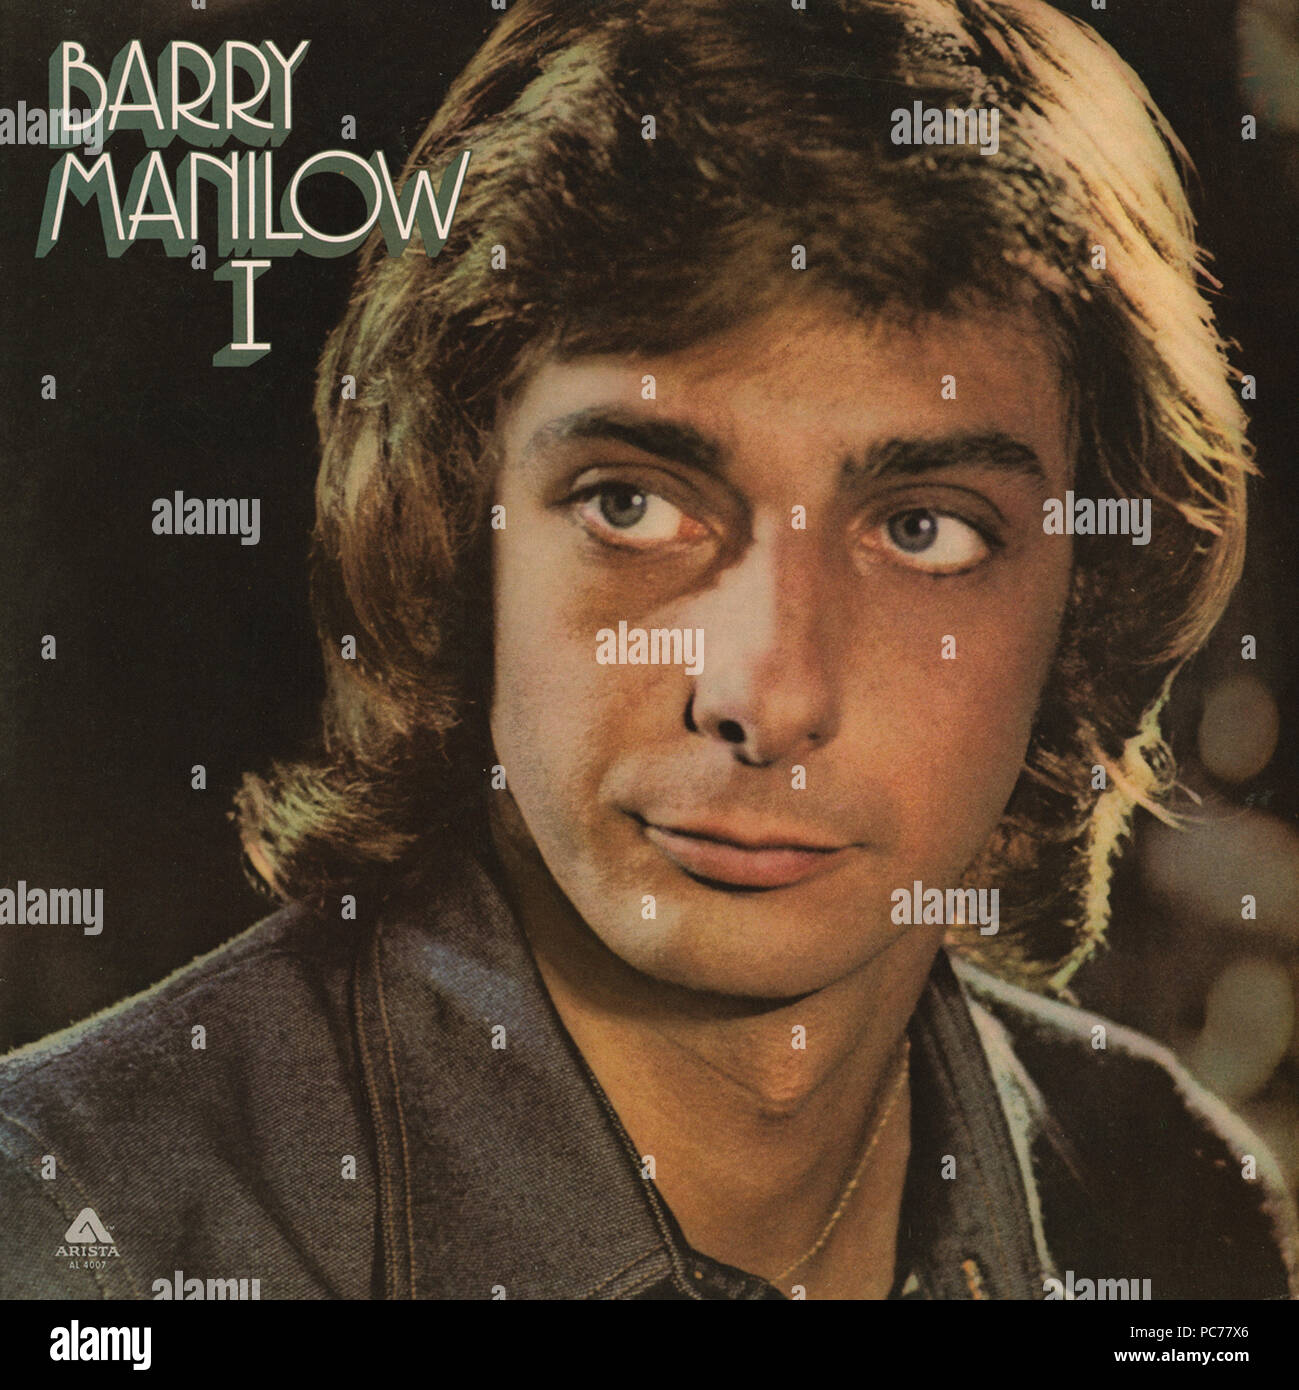 Barry Manilow Barry Manilow Vintage Vinyl Cover Album Front Stock Photo Alamy